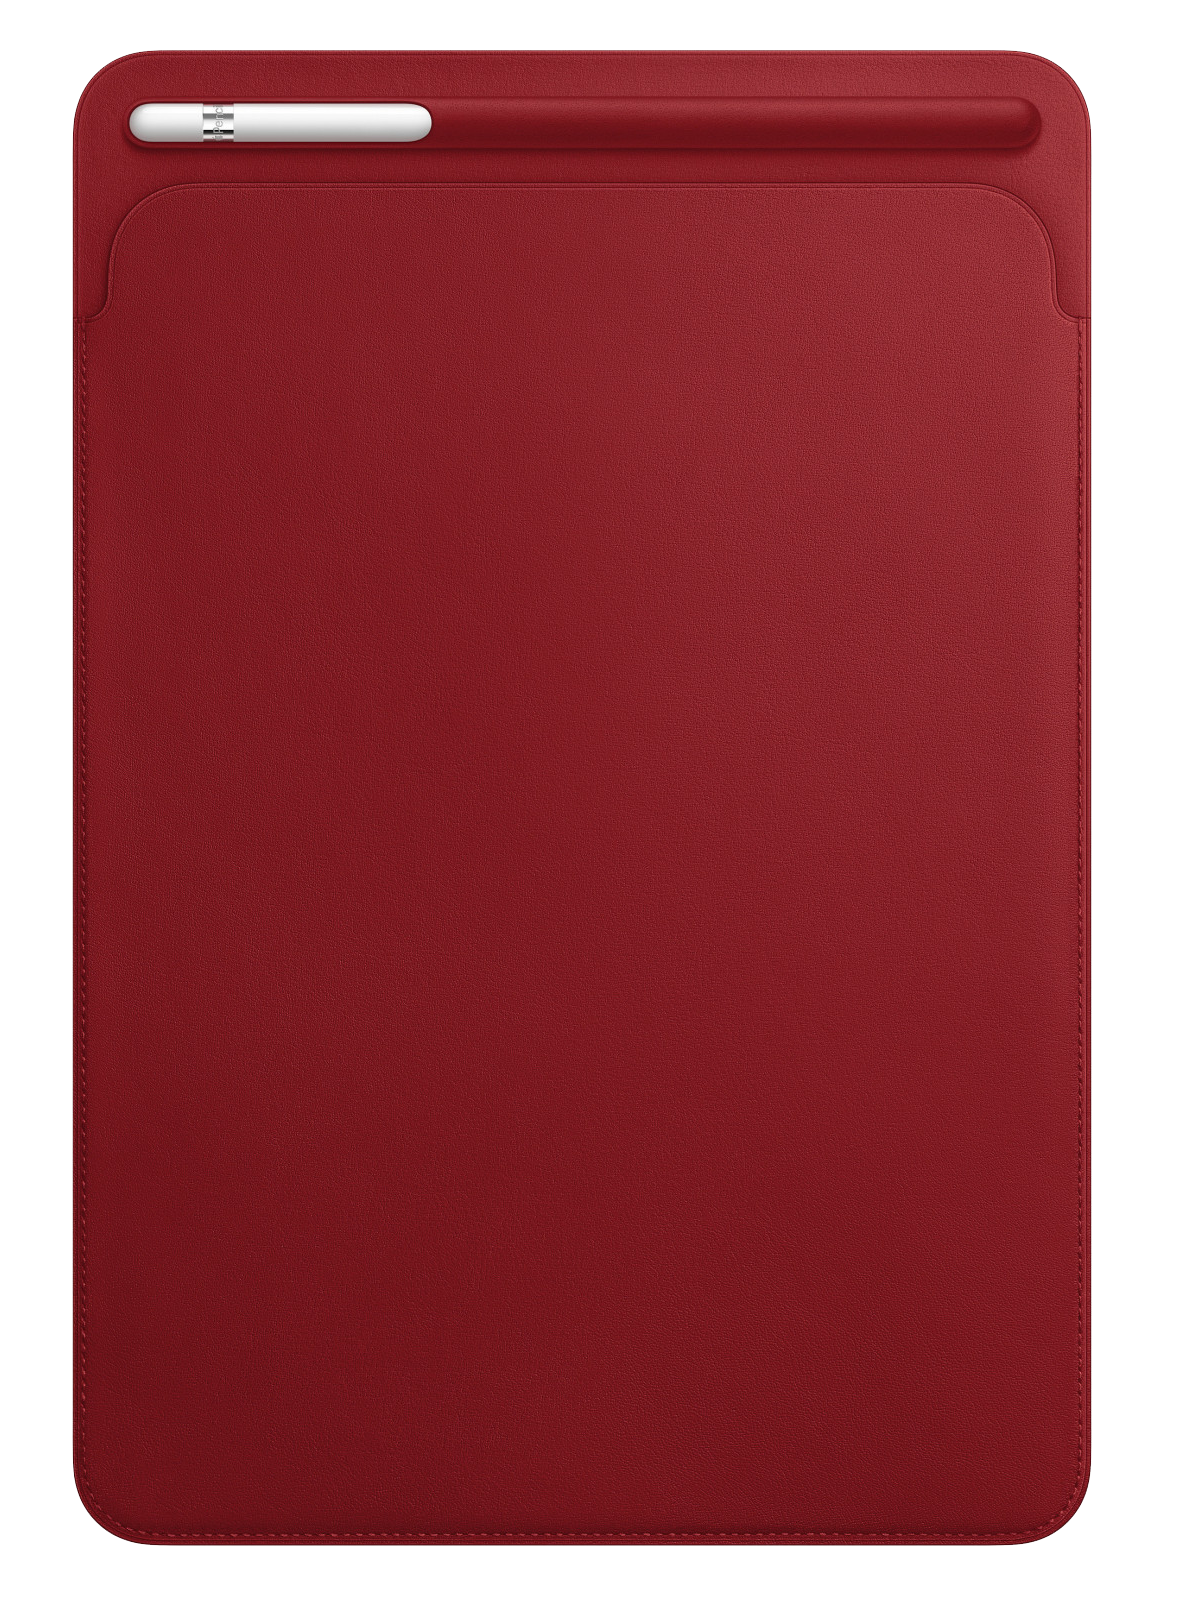 iPad Pro 10.5 leather case